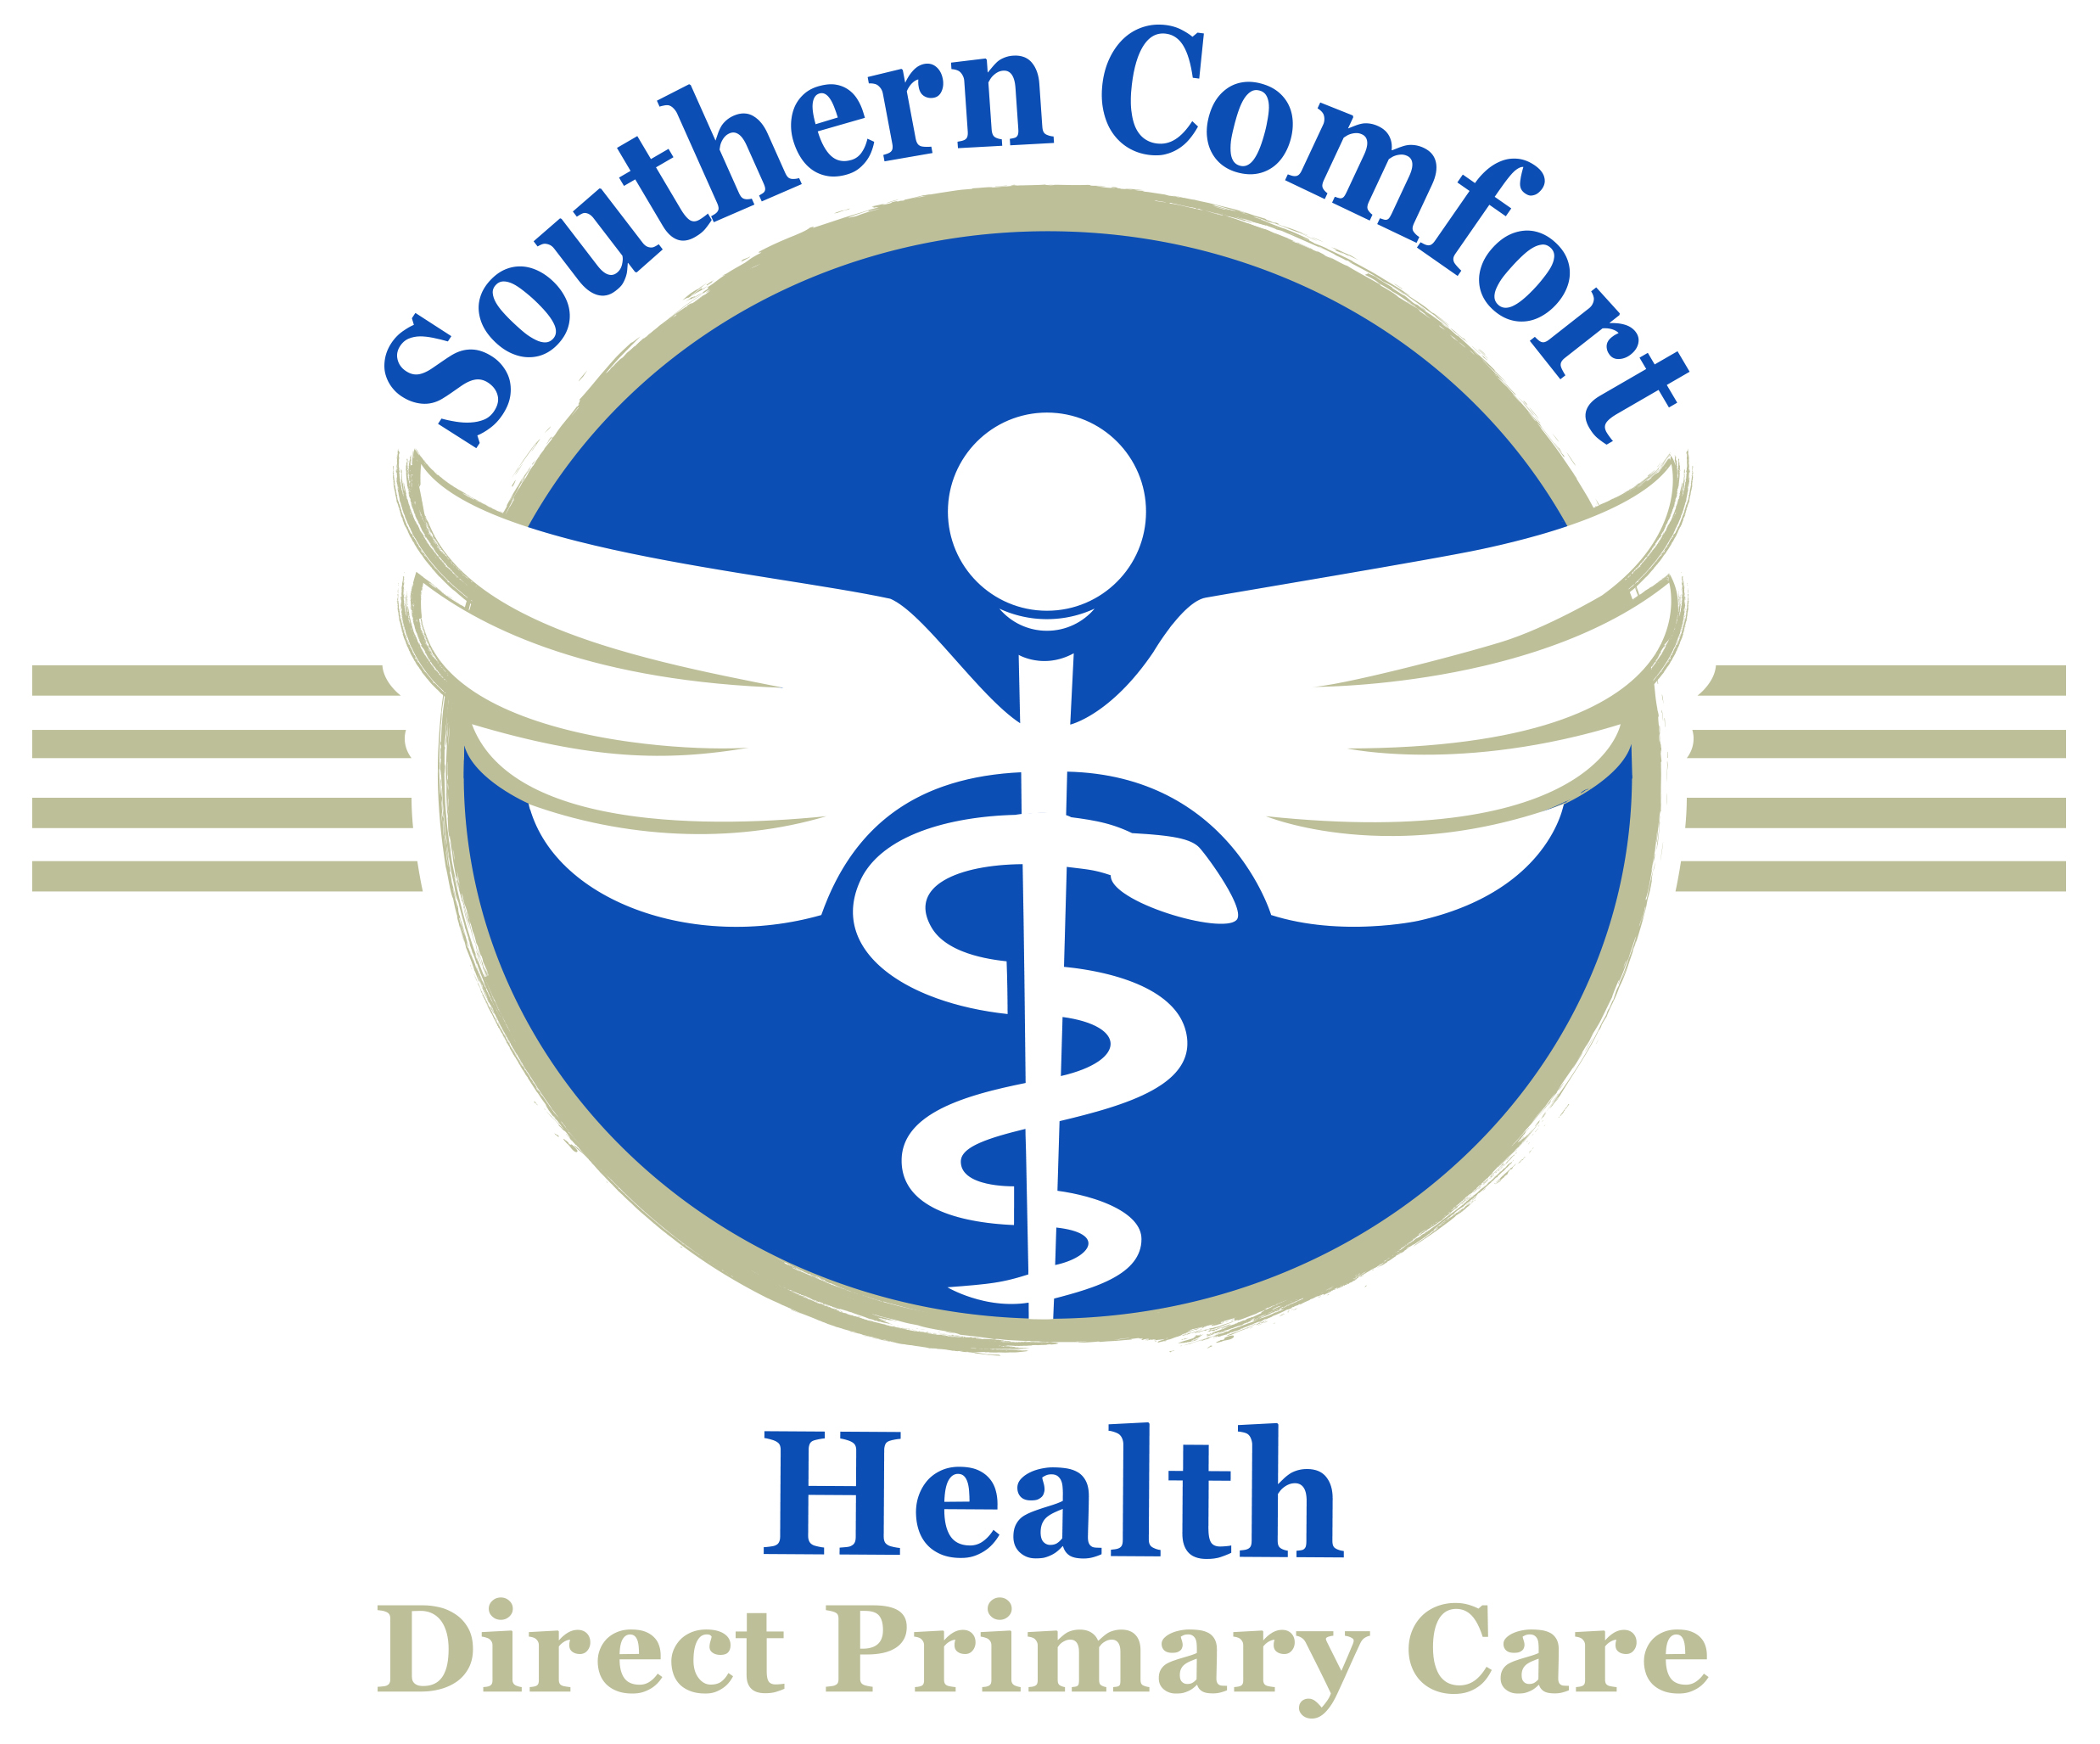 Southern Comfort Health DPC Logo